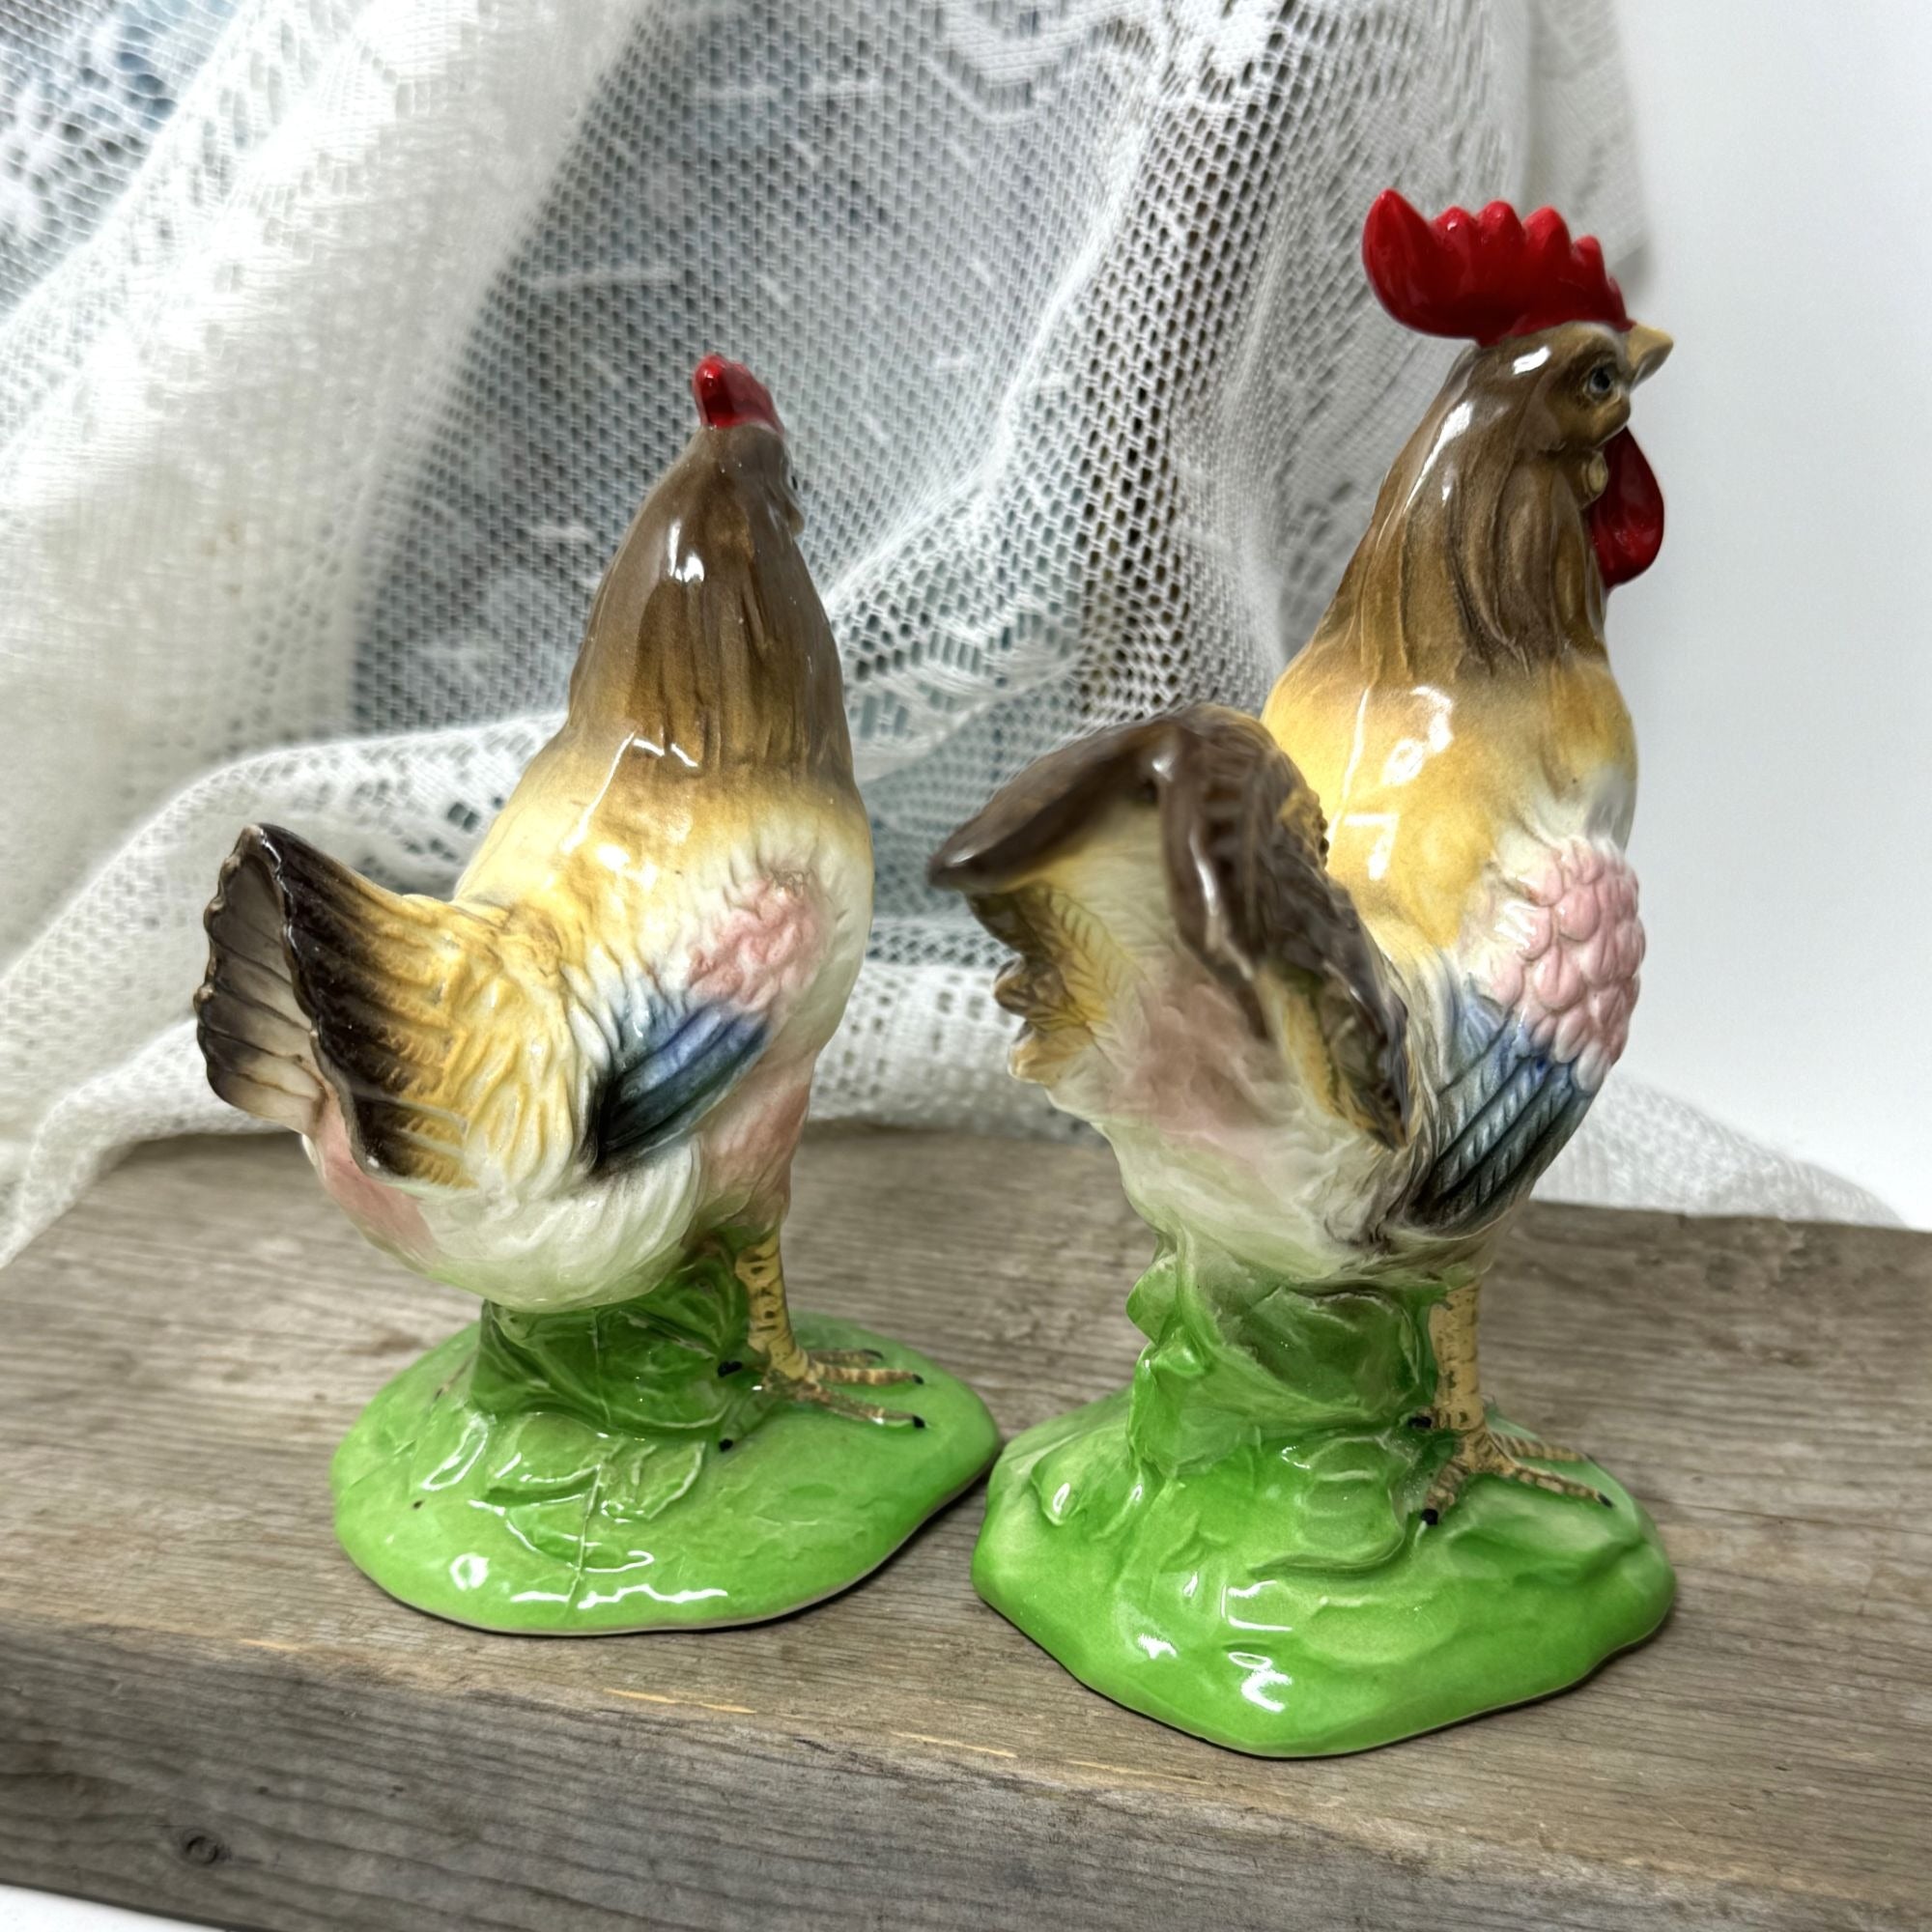 Vintage Chick & Rooster Figurines Patmar Japan 5" tall Original sticker